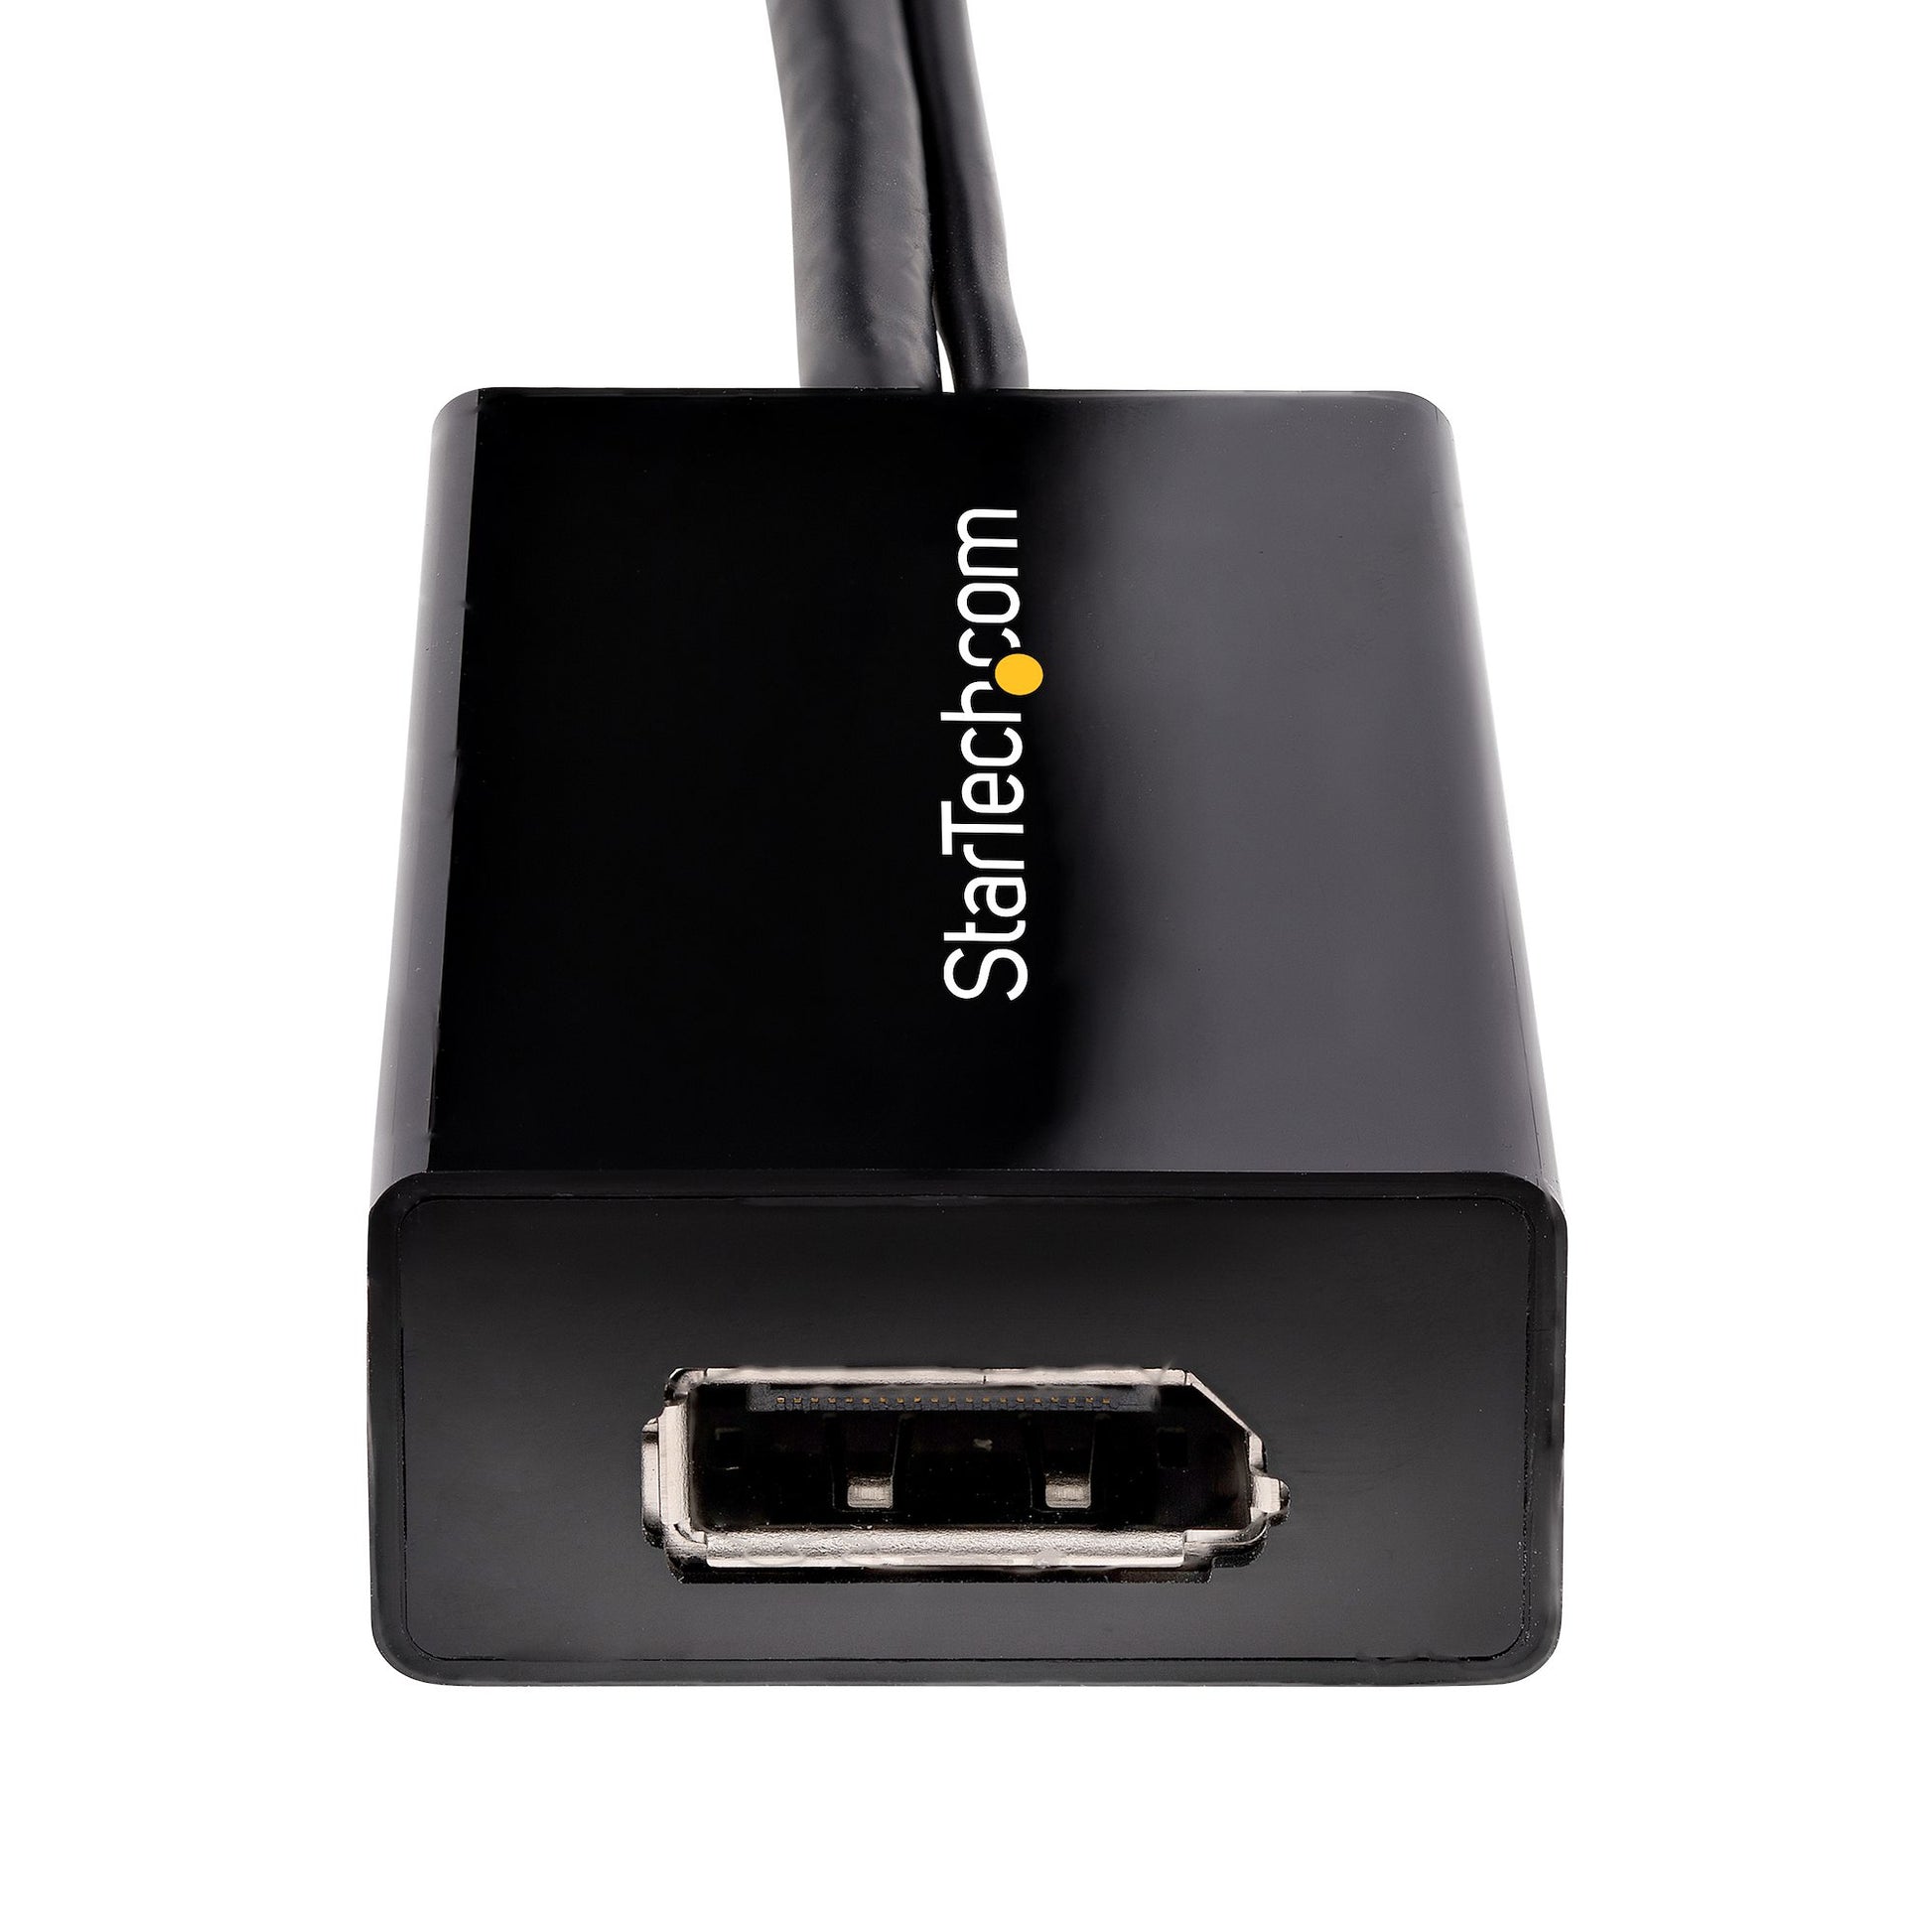 StarTech.com DVI to DisplayPort Adapter - USB Power - 1920 x 1200 - DVI to DisplayPort Converter - Video Adapter - DVI-D to DP-1